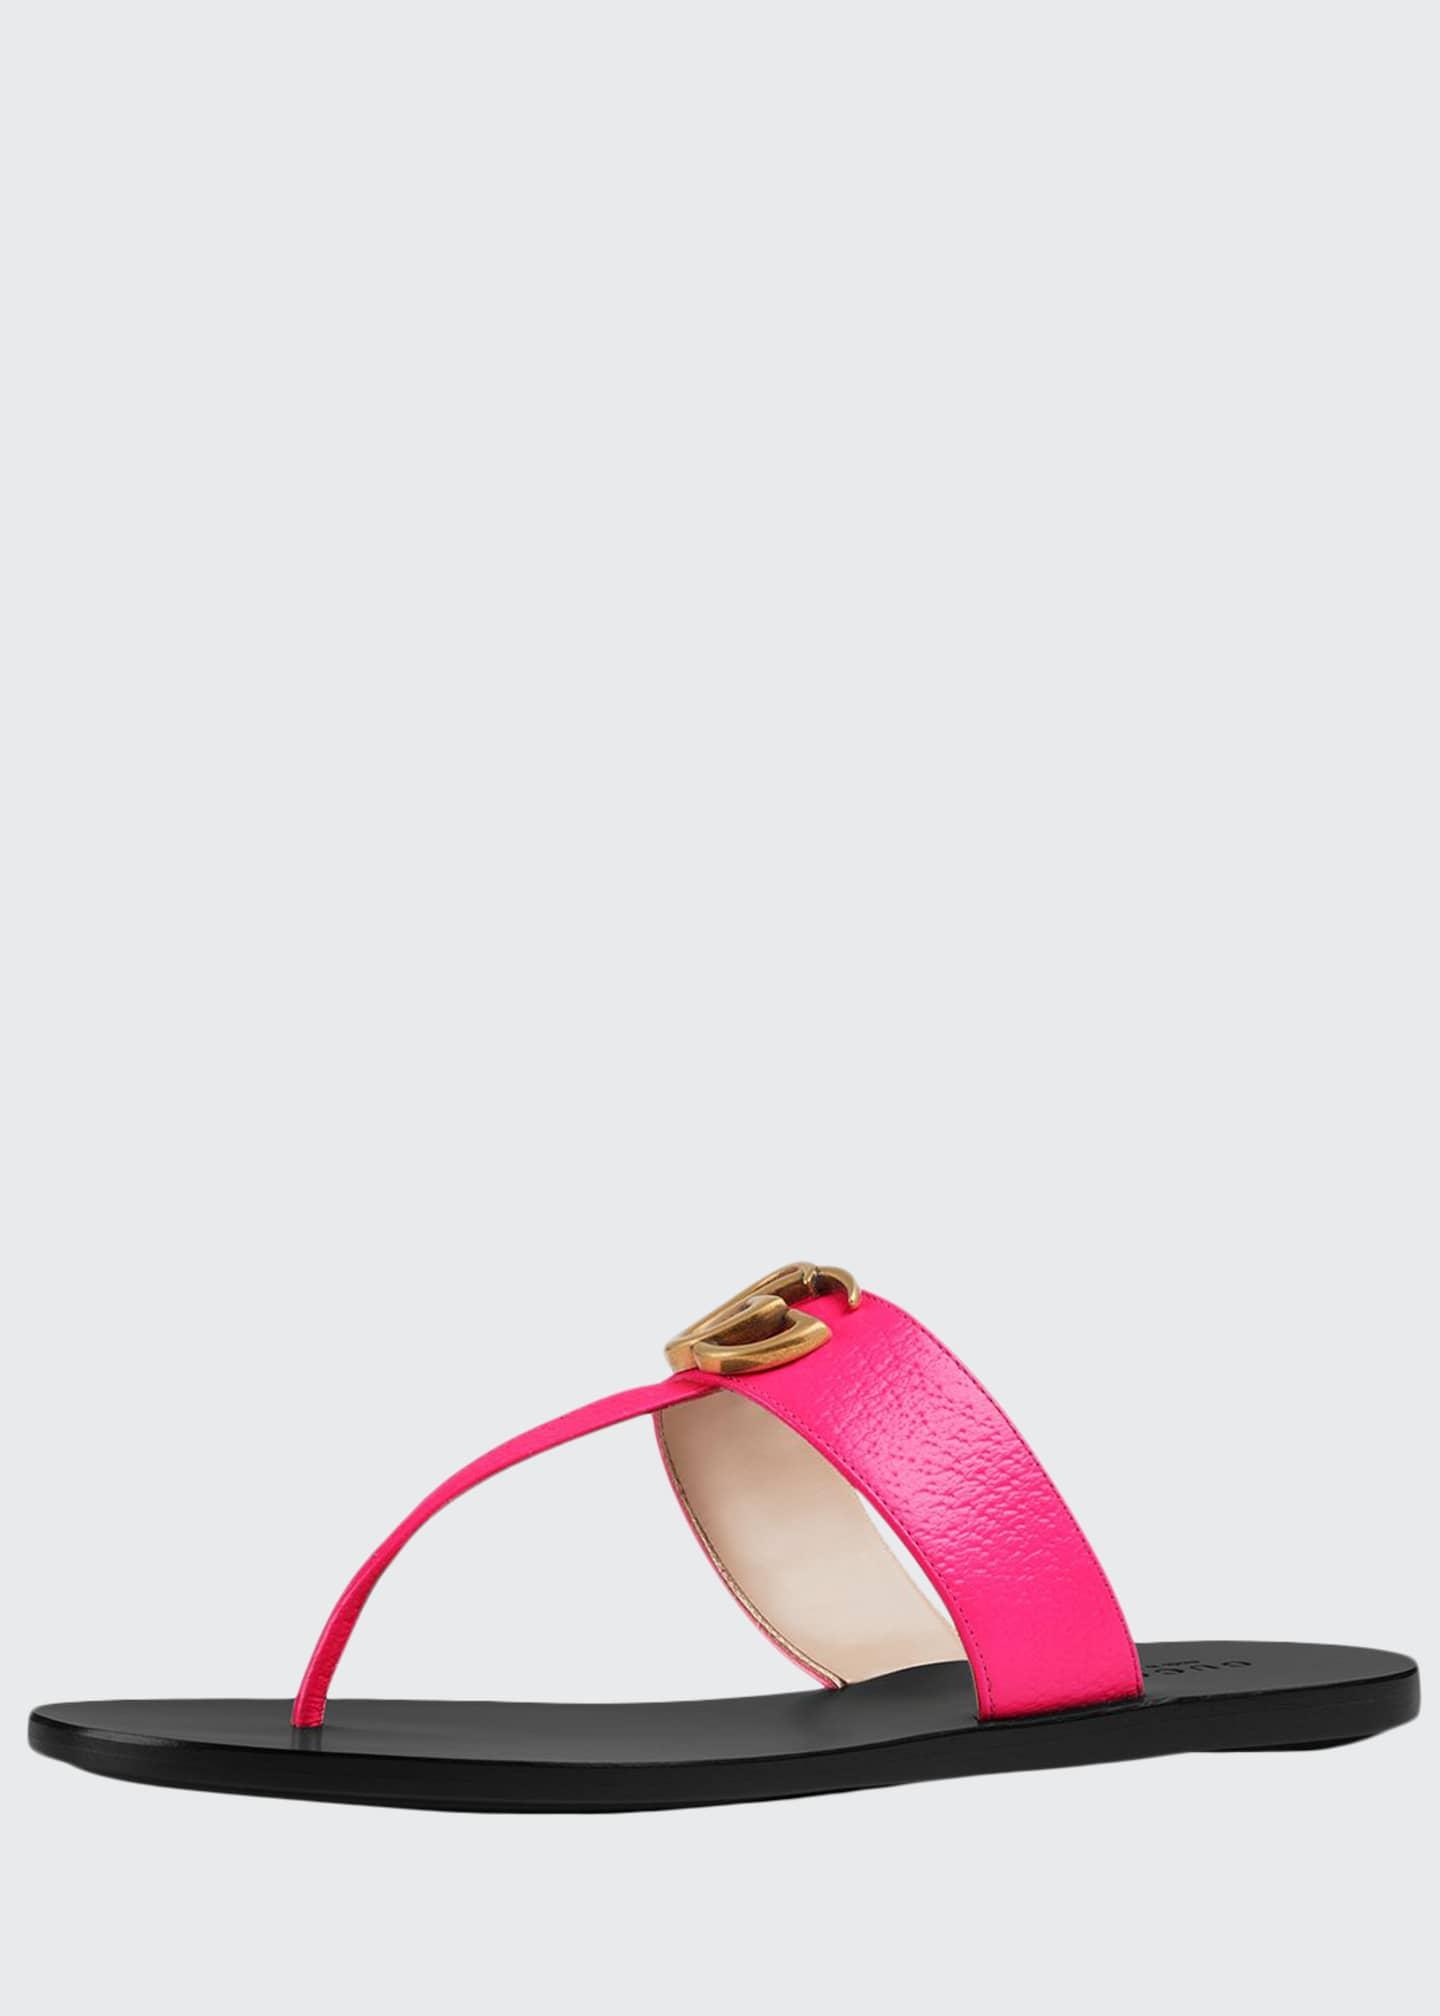 gucci neon pink sandals